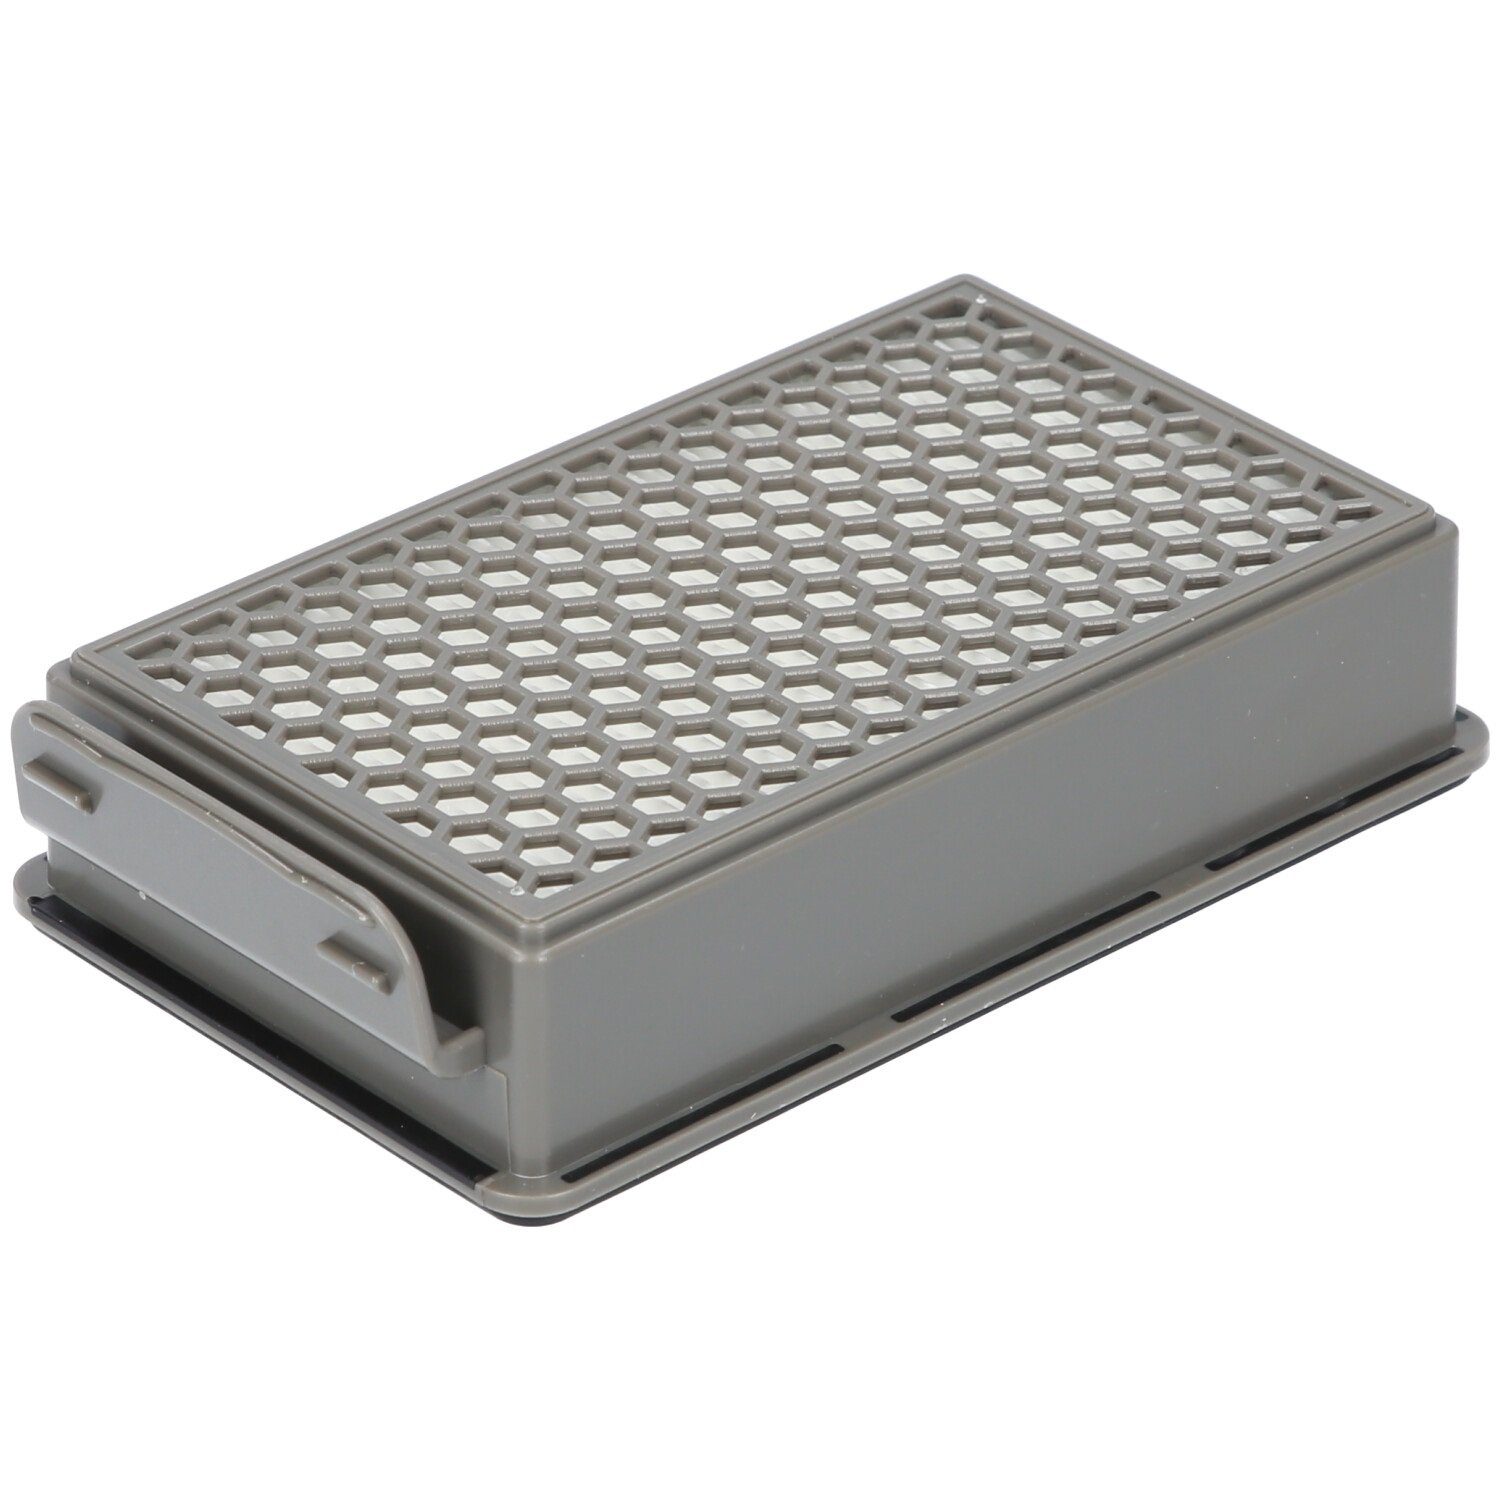 1x geeignet MO3951PA für ZR005901 McFilter Filter-Set für Alternativ Filterkassette, 1x MO3967PA MO3985PA, Rundfilter, MO3969PA, / Moulinex / / MO3953PA